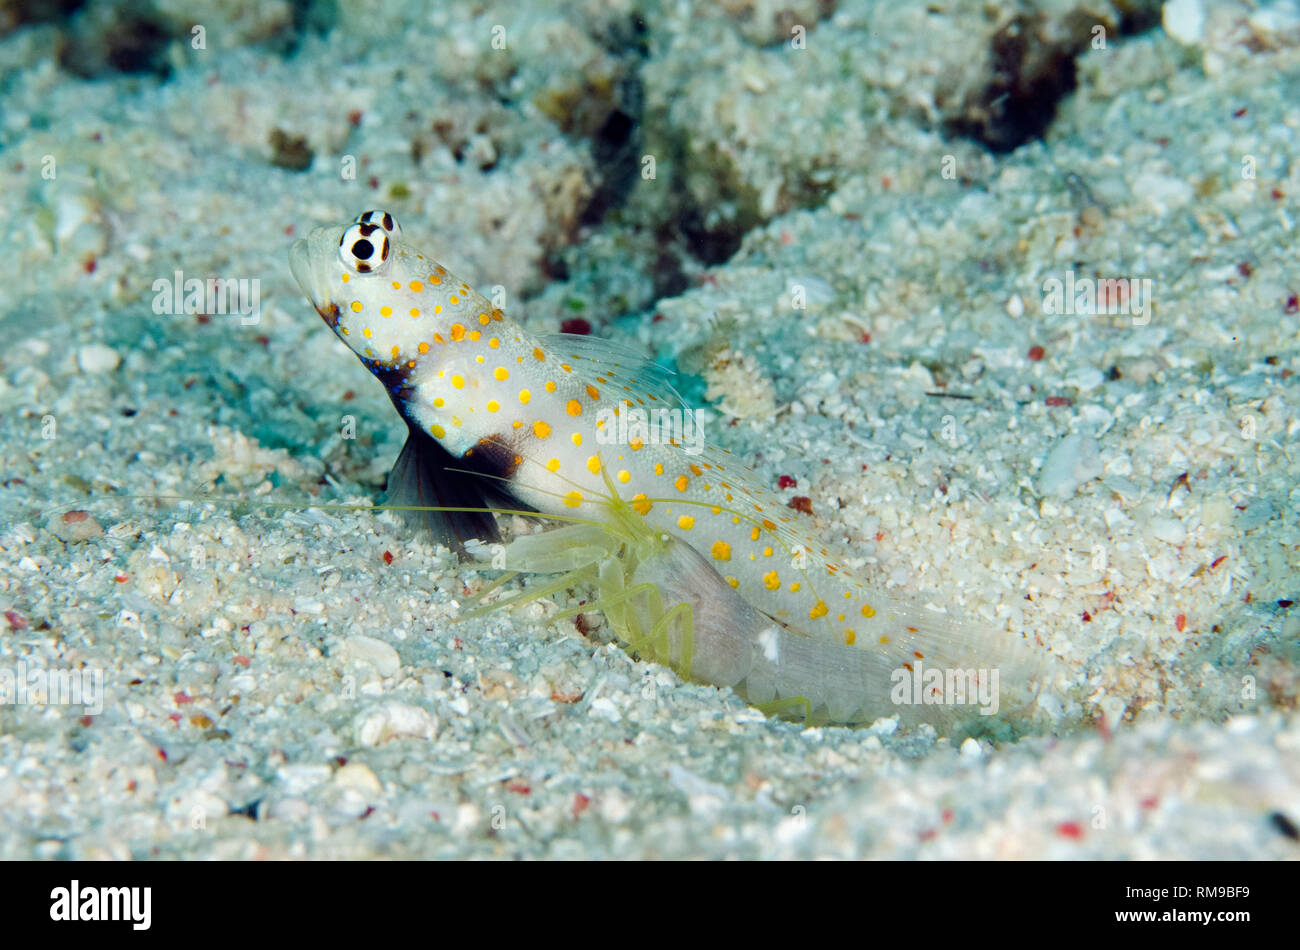 Spotted Shrimpgoby, Amblyeleotris guttata, Snapping Shrimp (Alpheus sp) by hole, Nyata North Wall dive site, off Nyata Island, near Alor, Indonesia, I Stock Photo